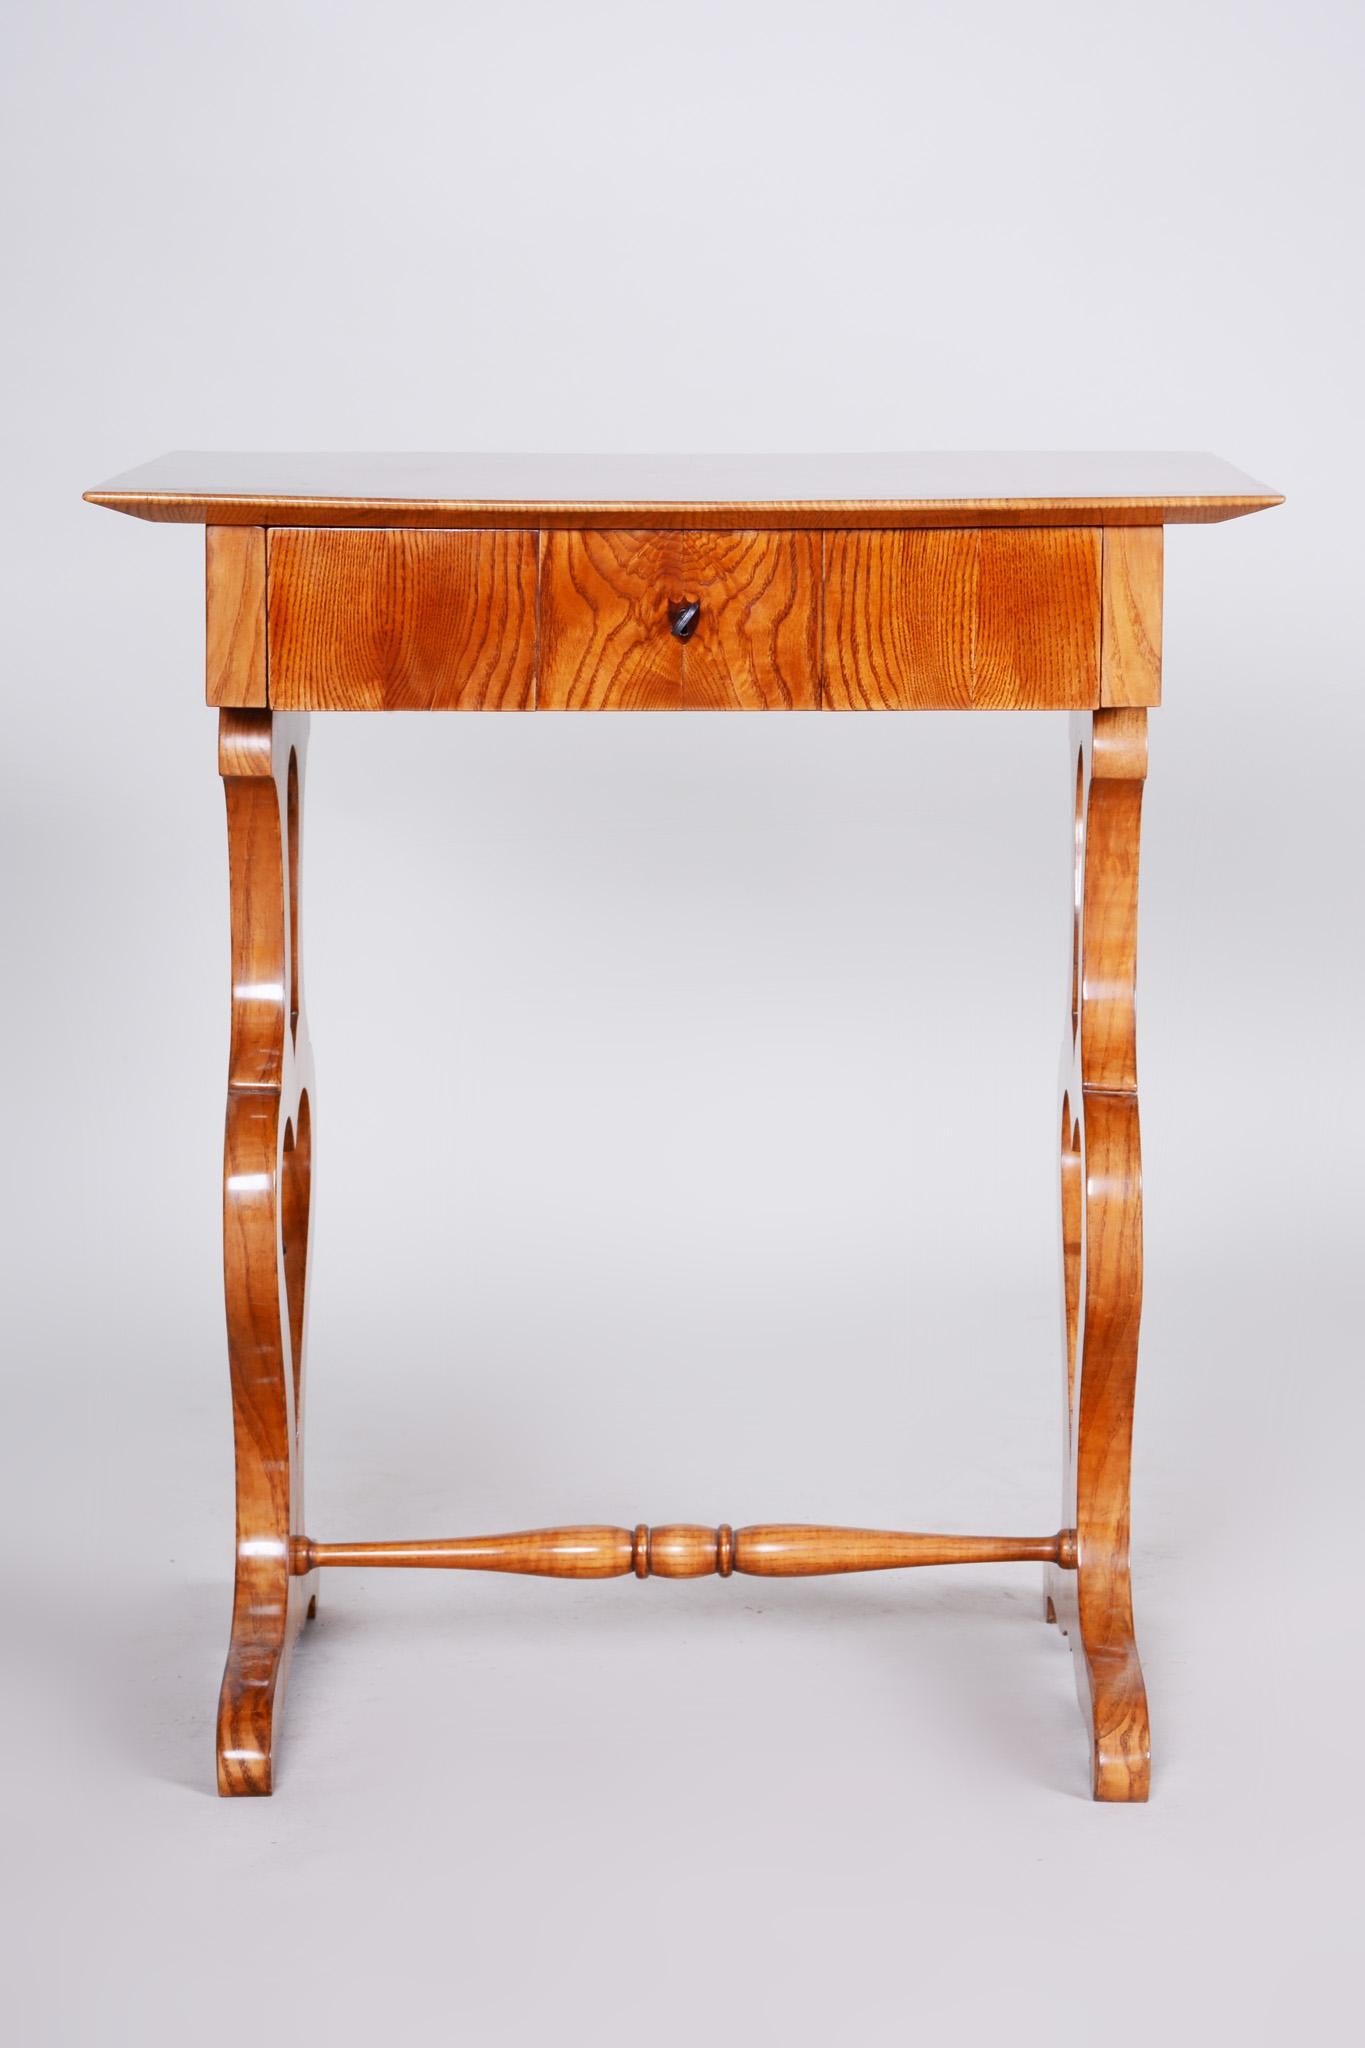 Czech Biedermeier small table.
Period: 1830-1839
Material: Walnut
Shellac polished.